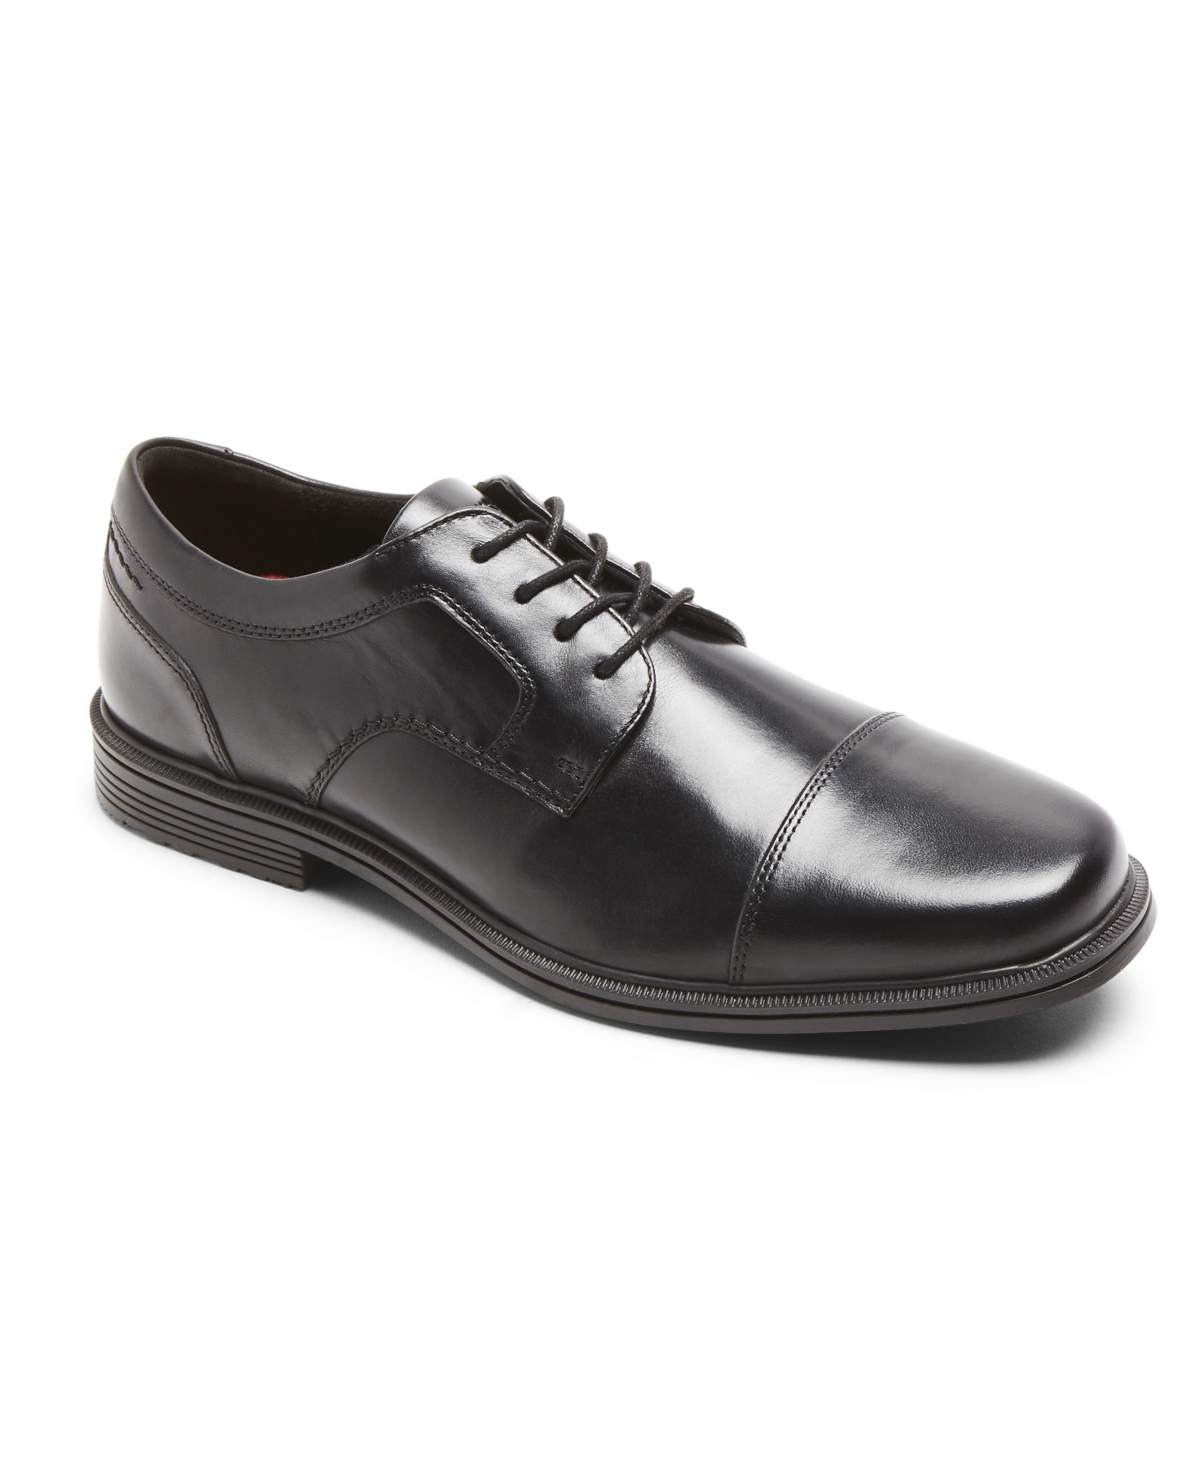 Men's Robinsyn Water-Resistance Cap Toe Oxford Shoes - Black